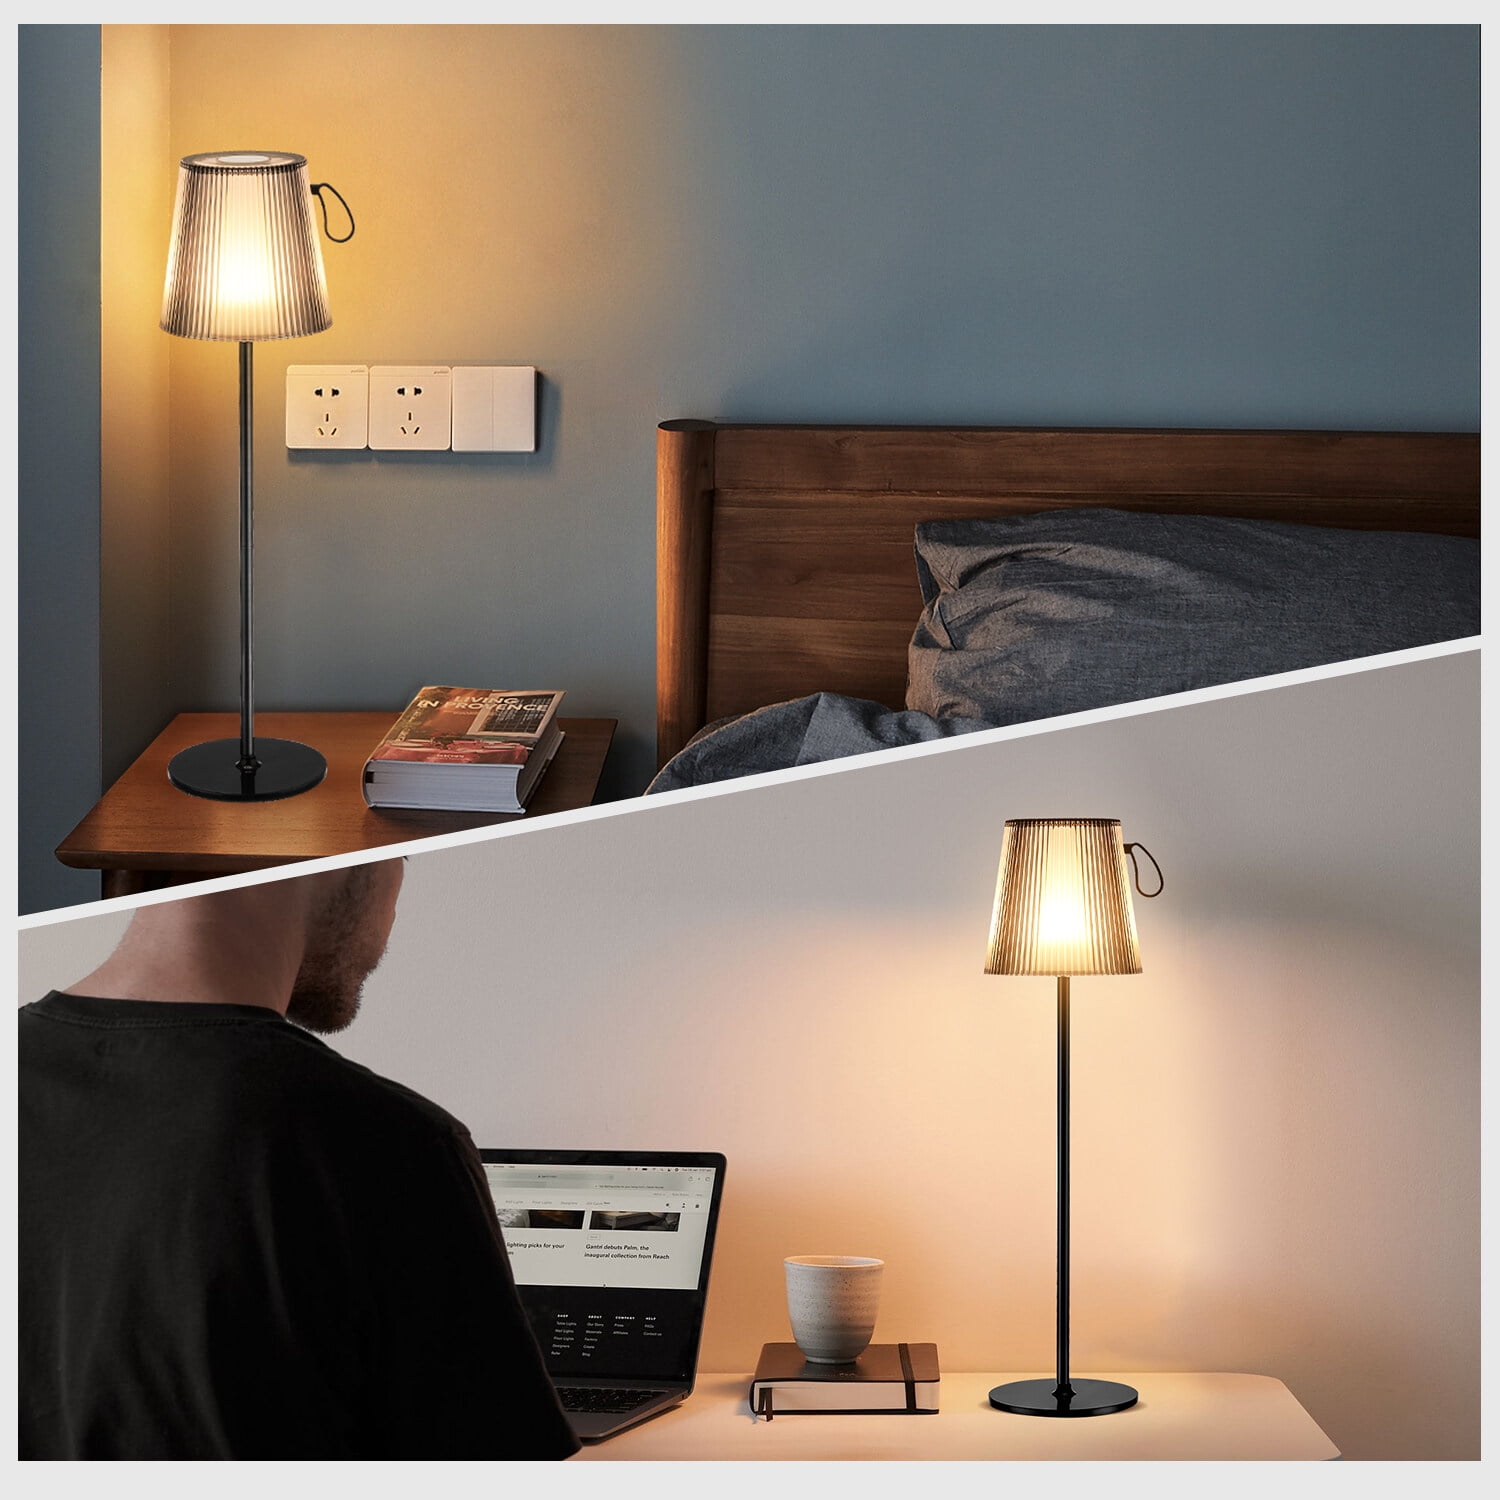 SHANGCAI LED Desk Lamp Cordless Table Light, Rechargeable Battery